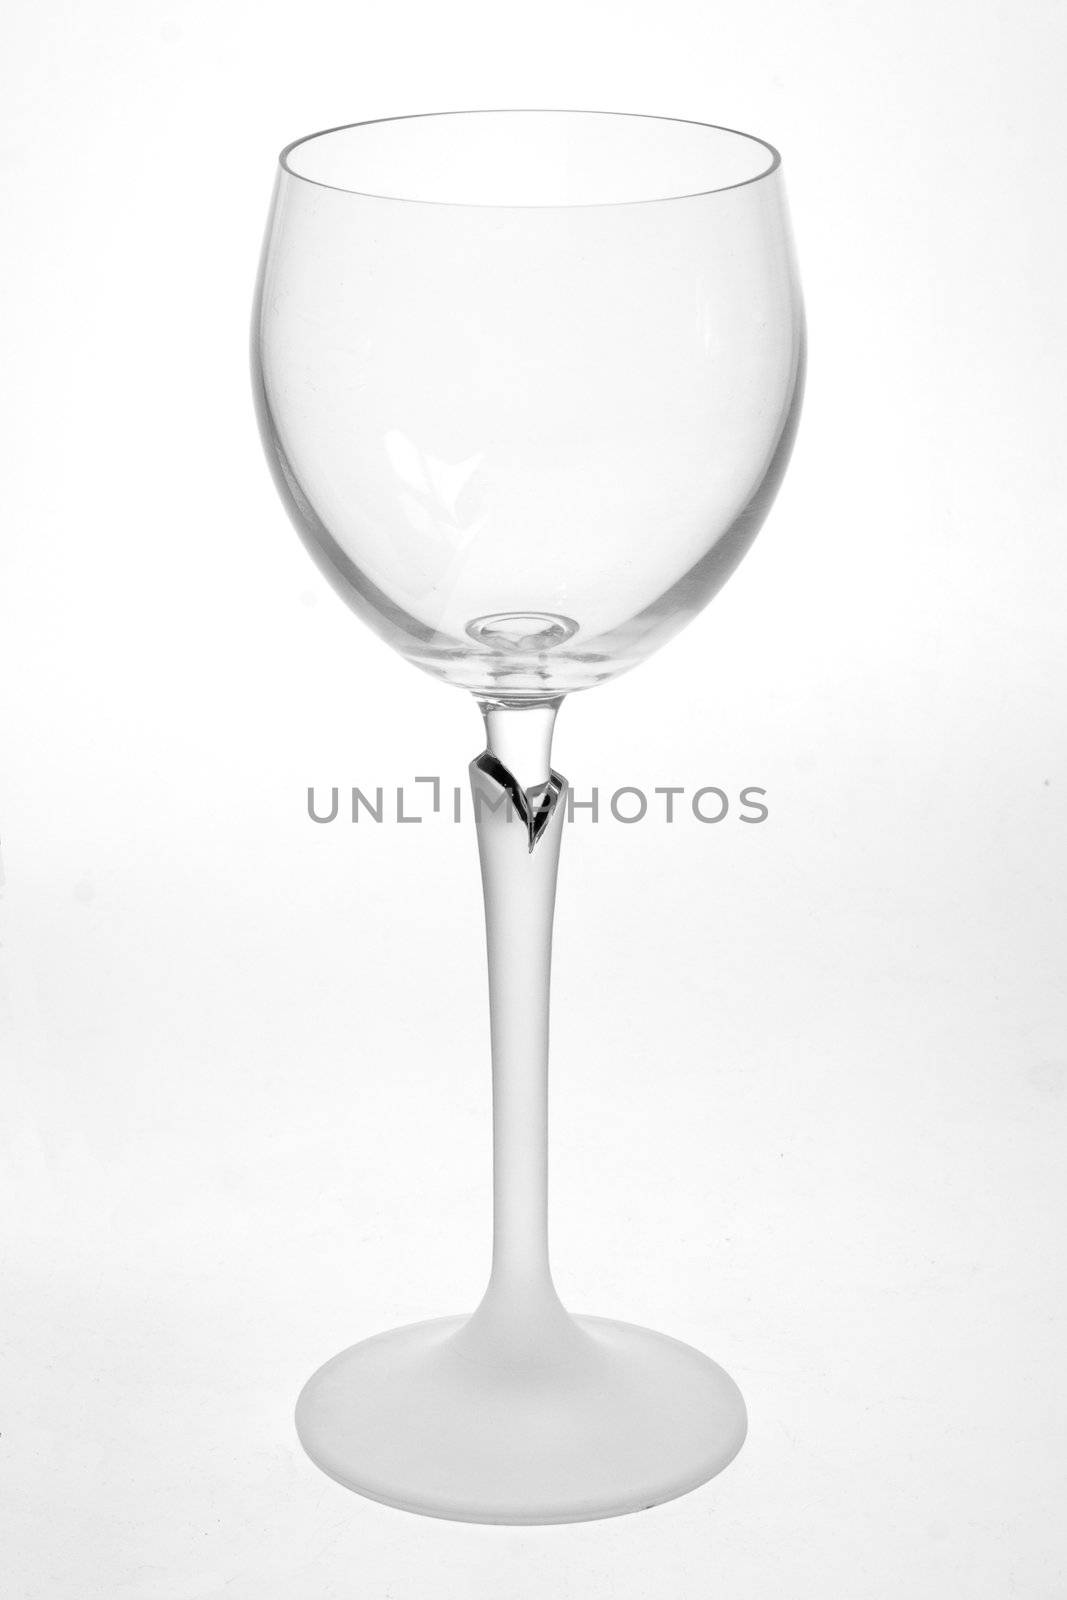 Wine glass, isolated, white background